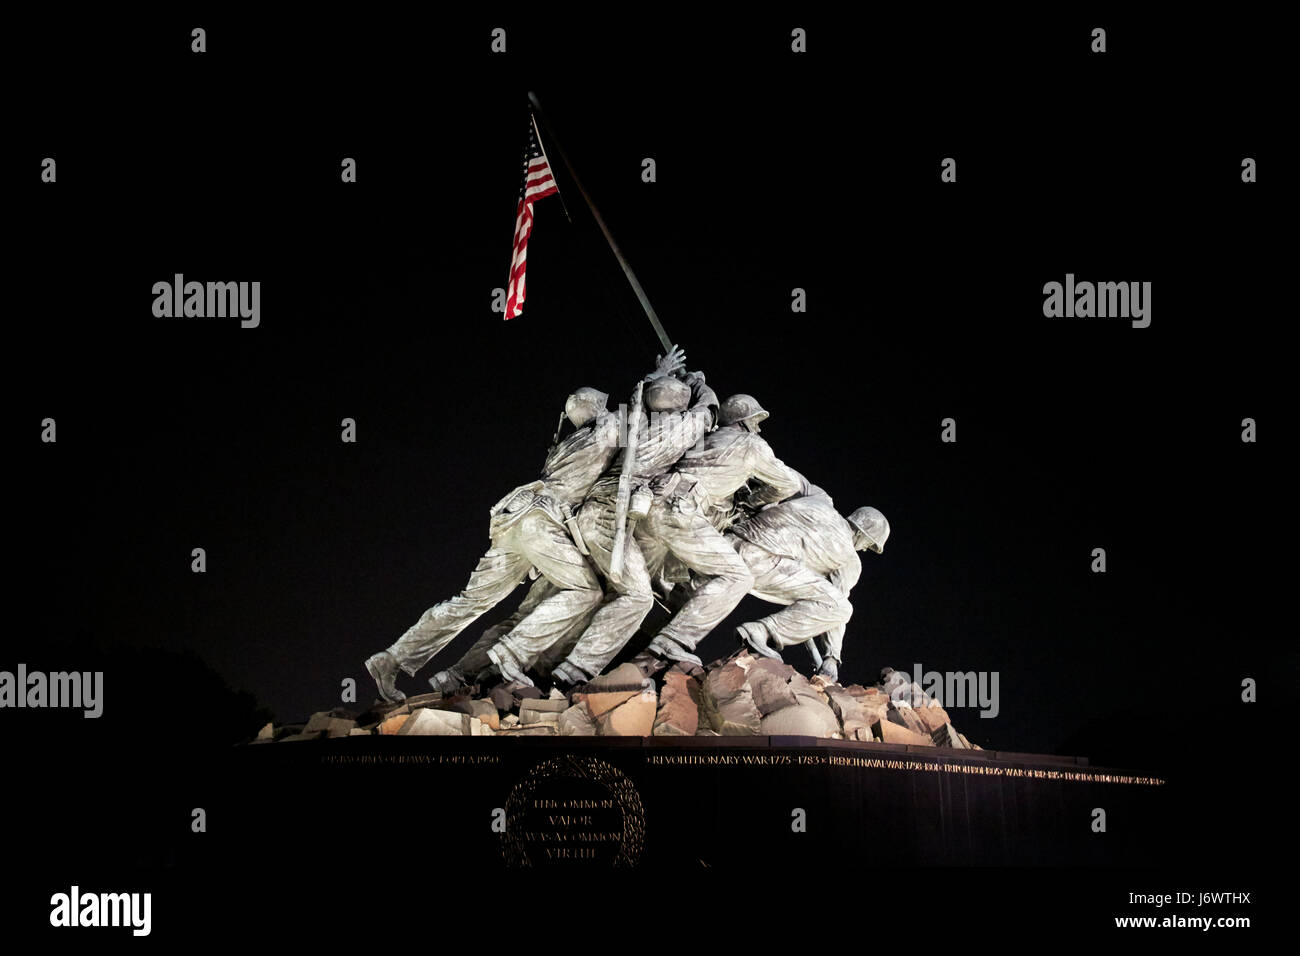 the united states marine corps iwo jima memorial statue at night Washington DC USA Stock Photo